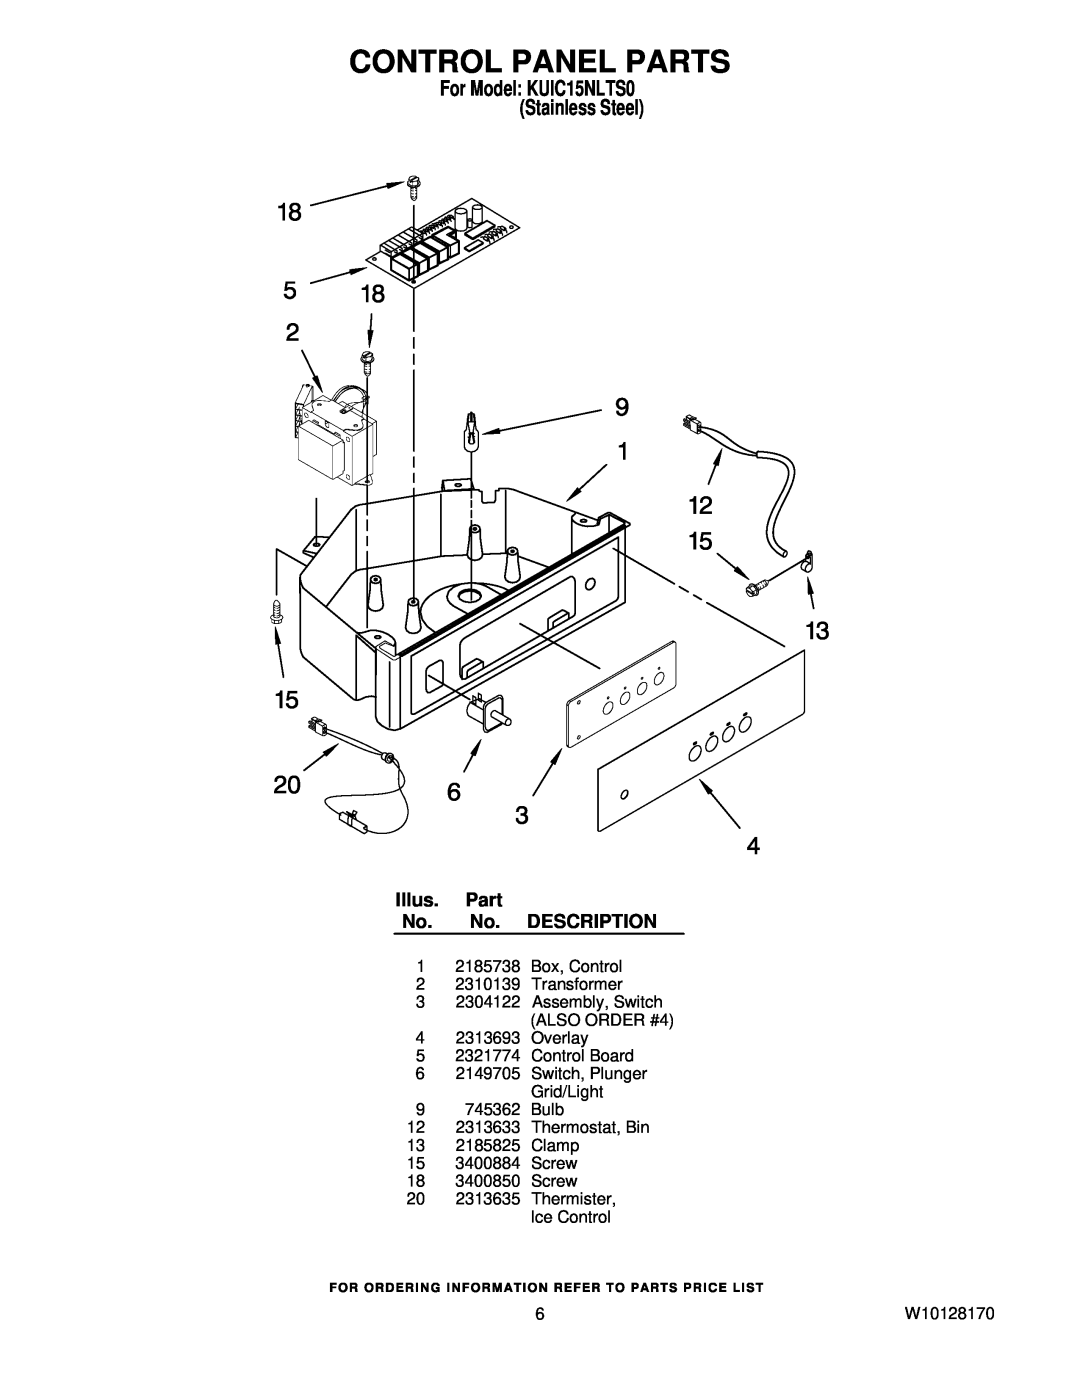 KitchenAid manual Control Panel Parts, For Model KUIC15NLTS0 Stainless Steel, Illus. Part No. No. DESCRIPTION, W10128170 